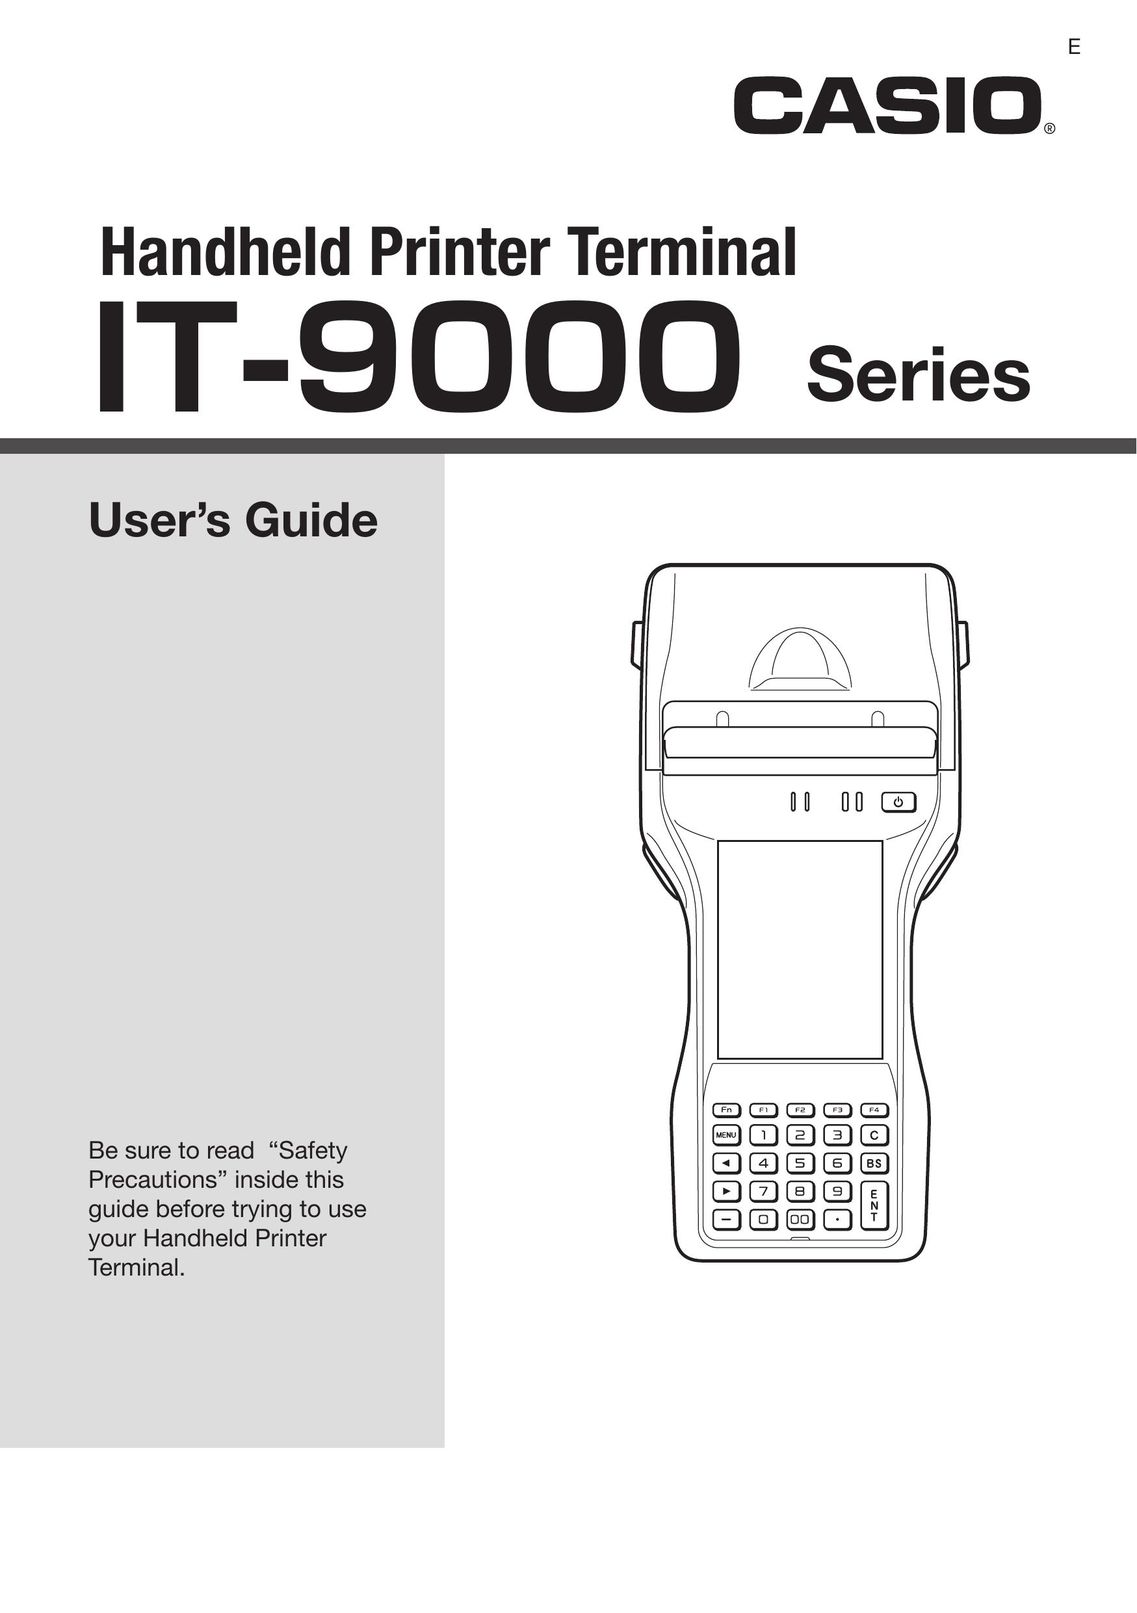 Casio SERIESIT-9000 All in One Printer User Manual